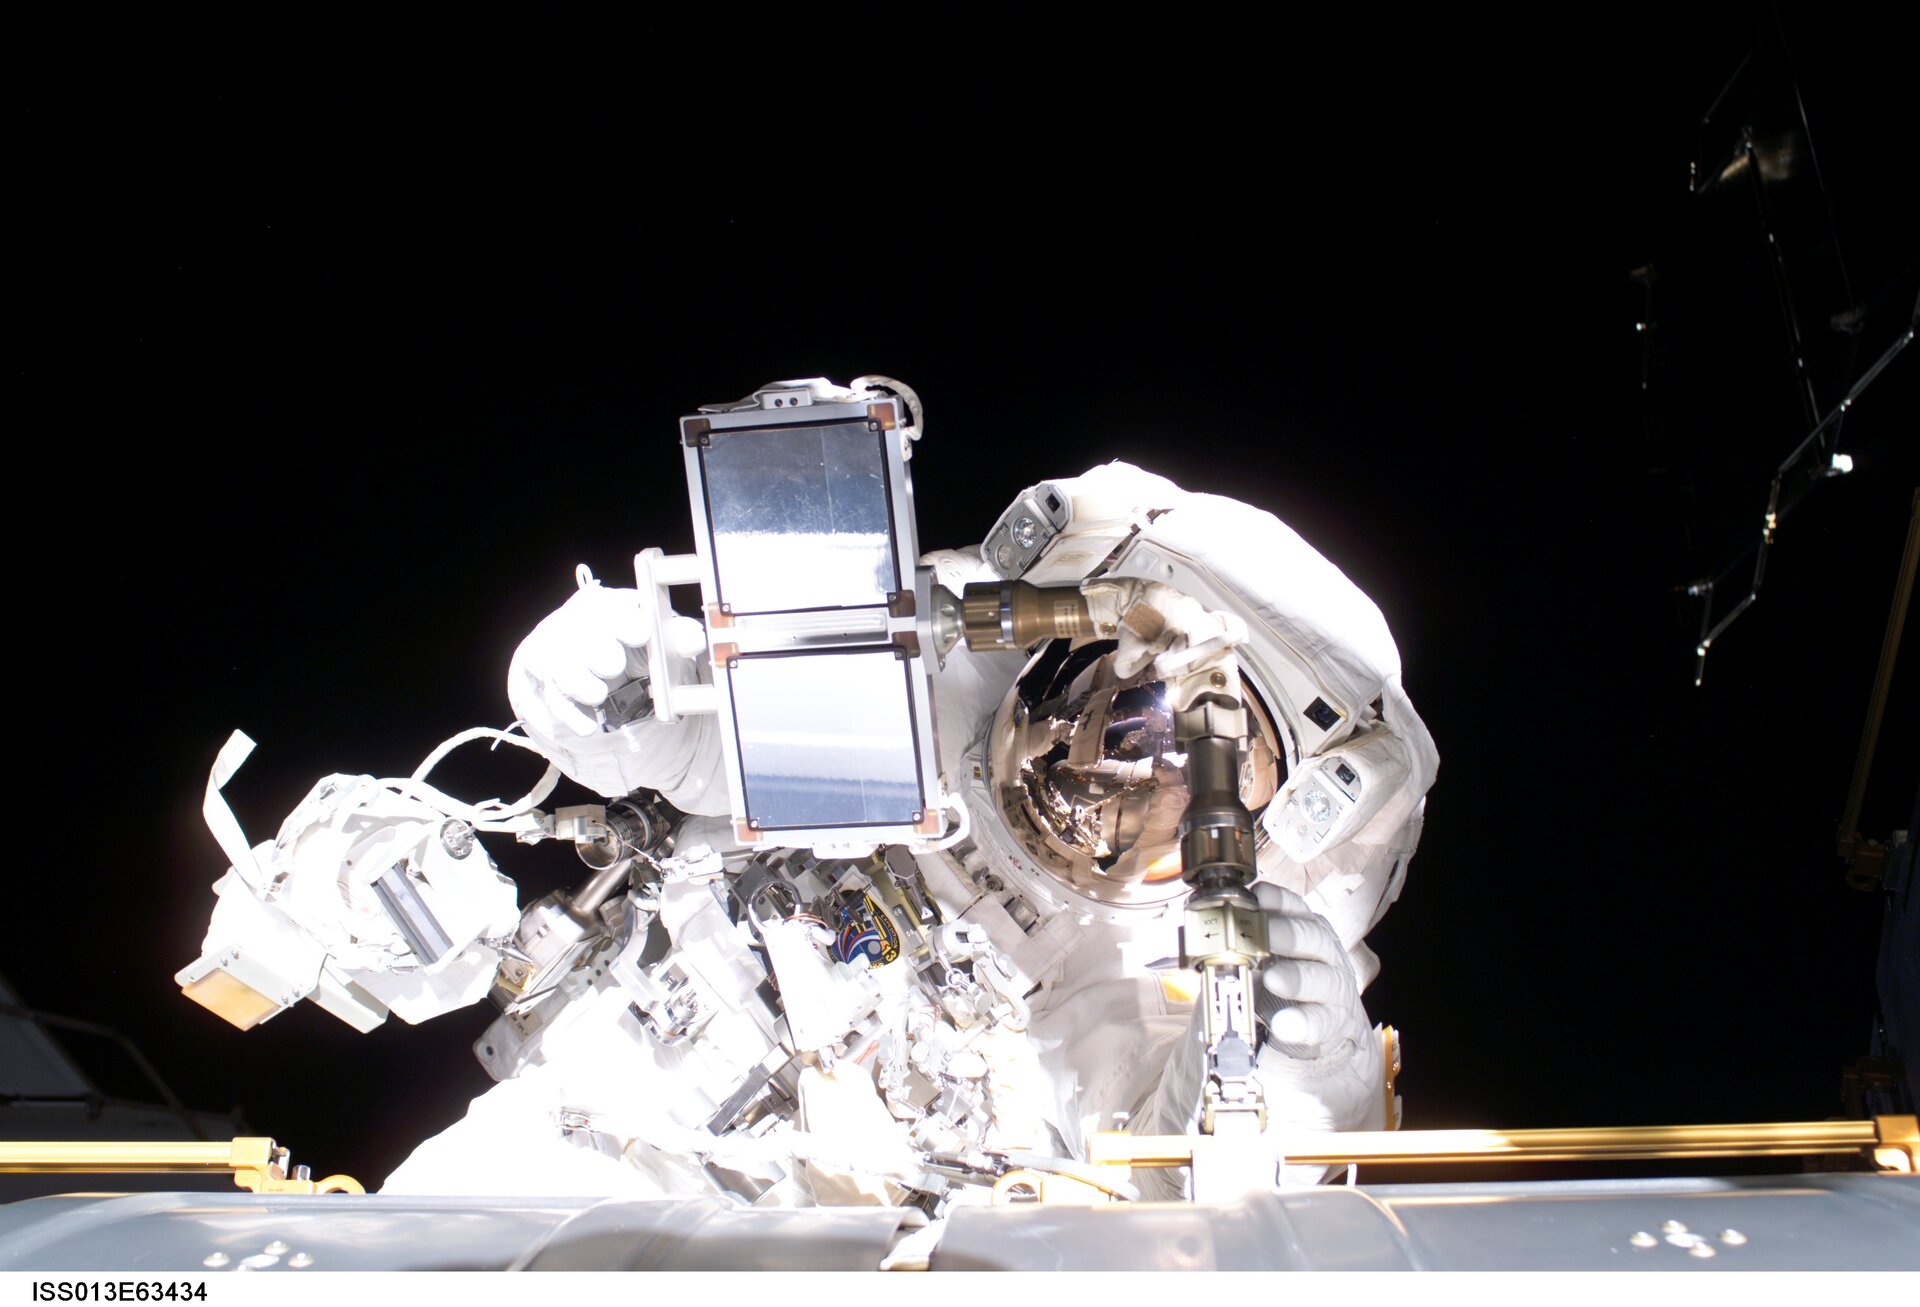 Thomas Reiter during a spacewalk